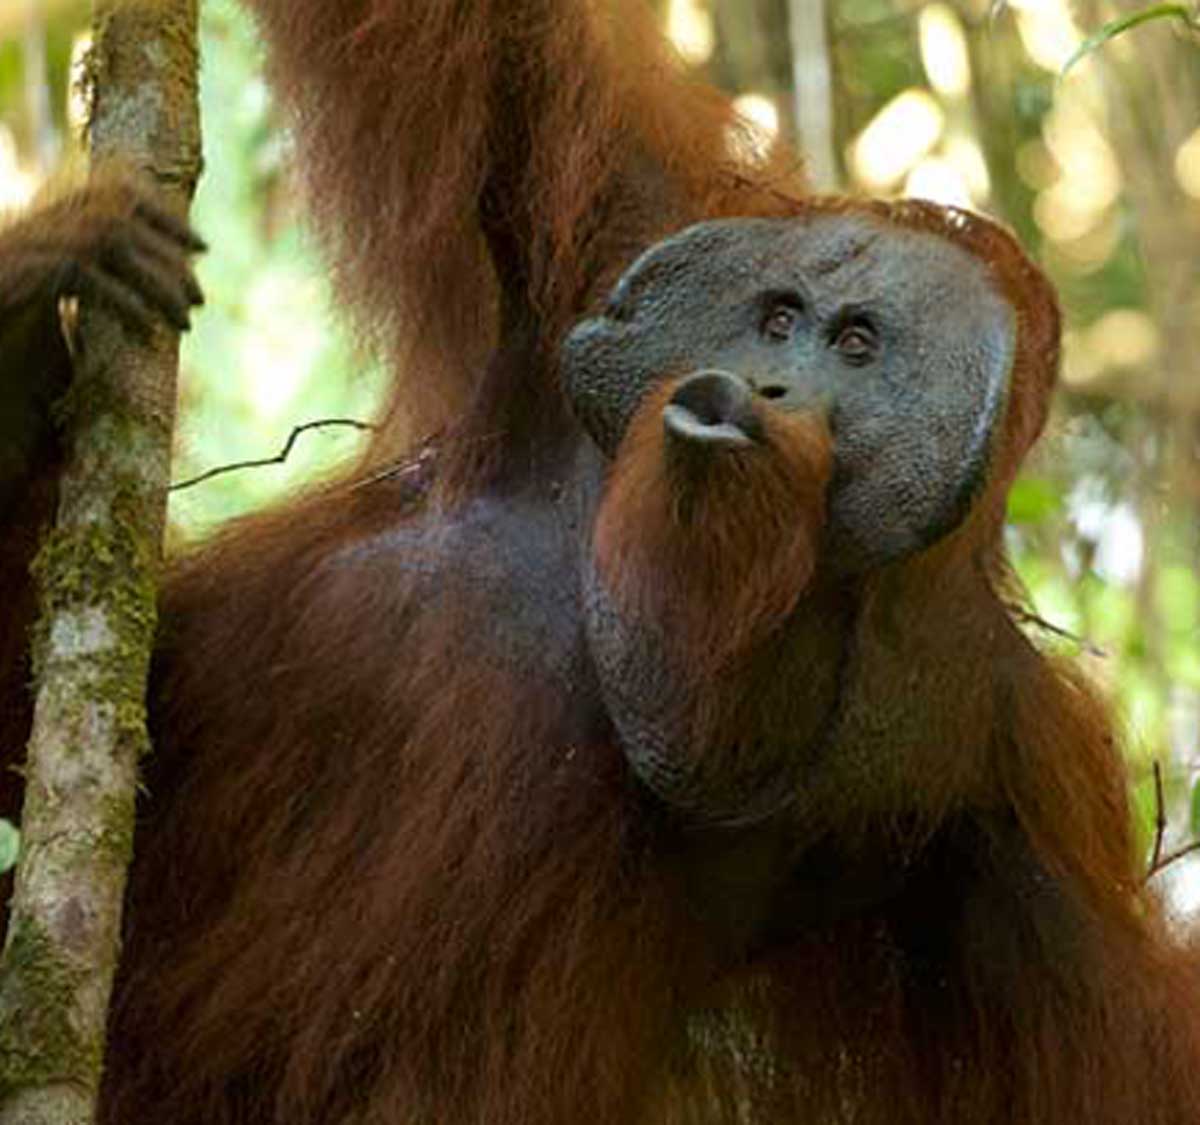 FEATURED-orangutan-culture-c-tim-laman1.